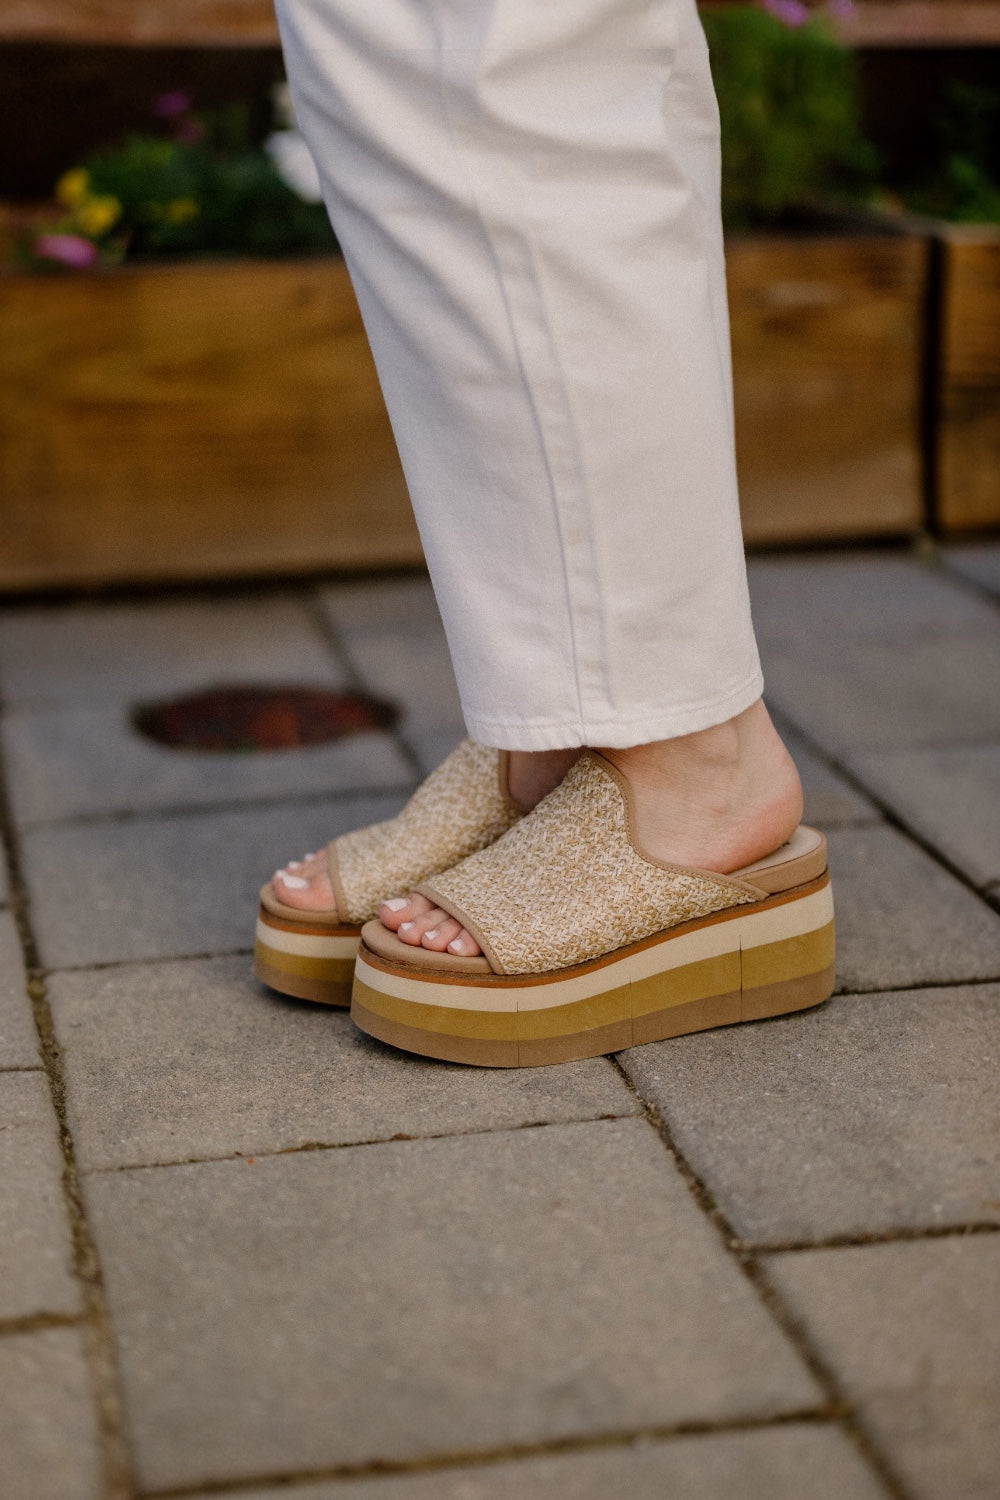 Flocci in Beige Platform Sandals by Naked Feet